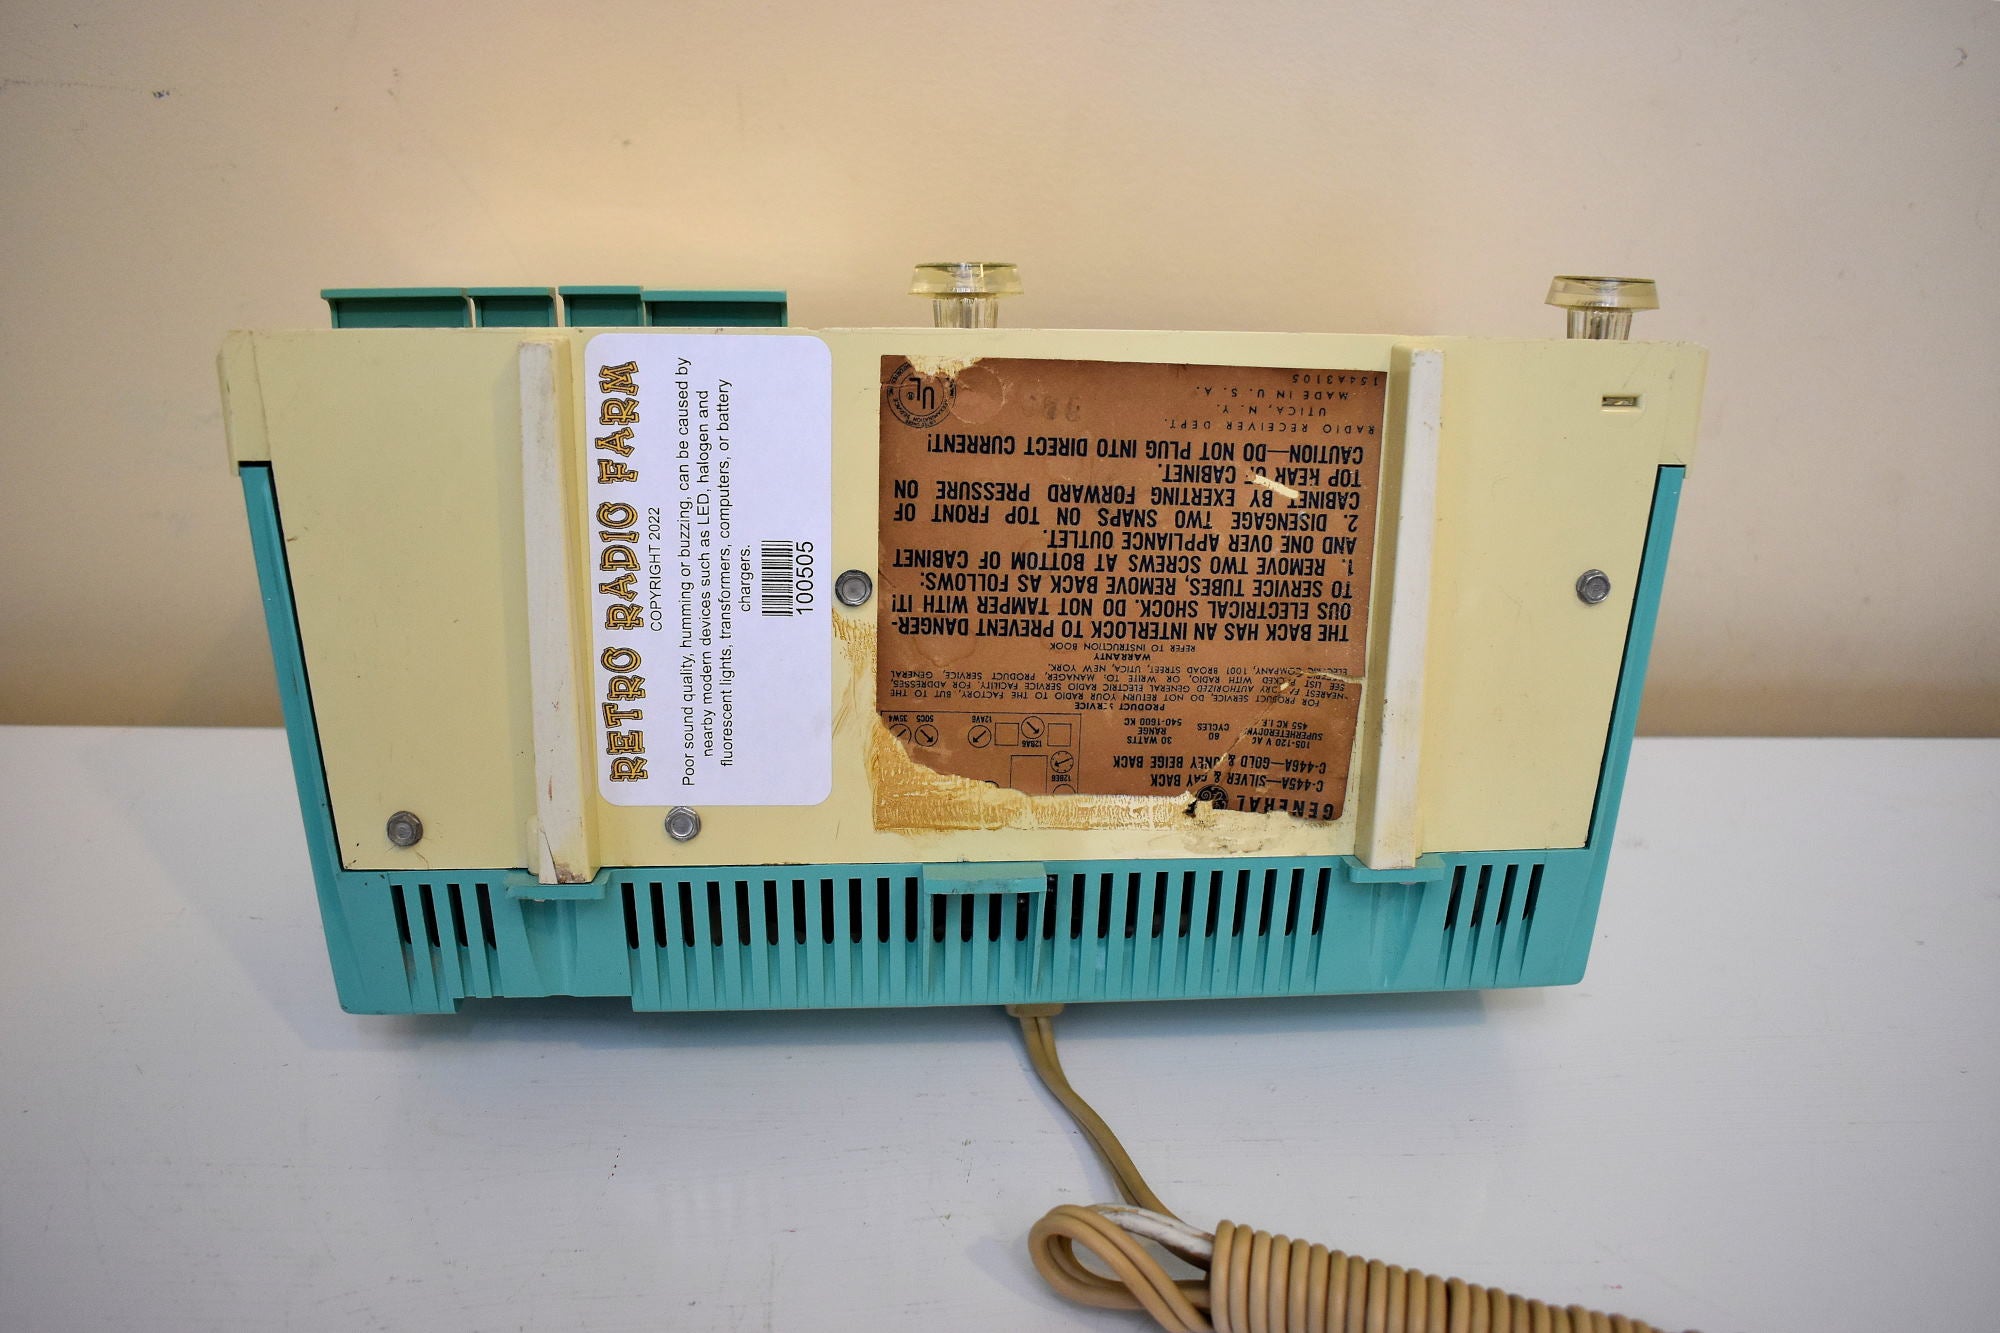 Turquoise and White 1960 General Electric Model C-4518 AM Vintage Radi –  Retro Radio Farm